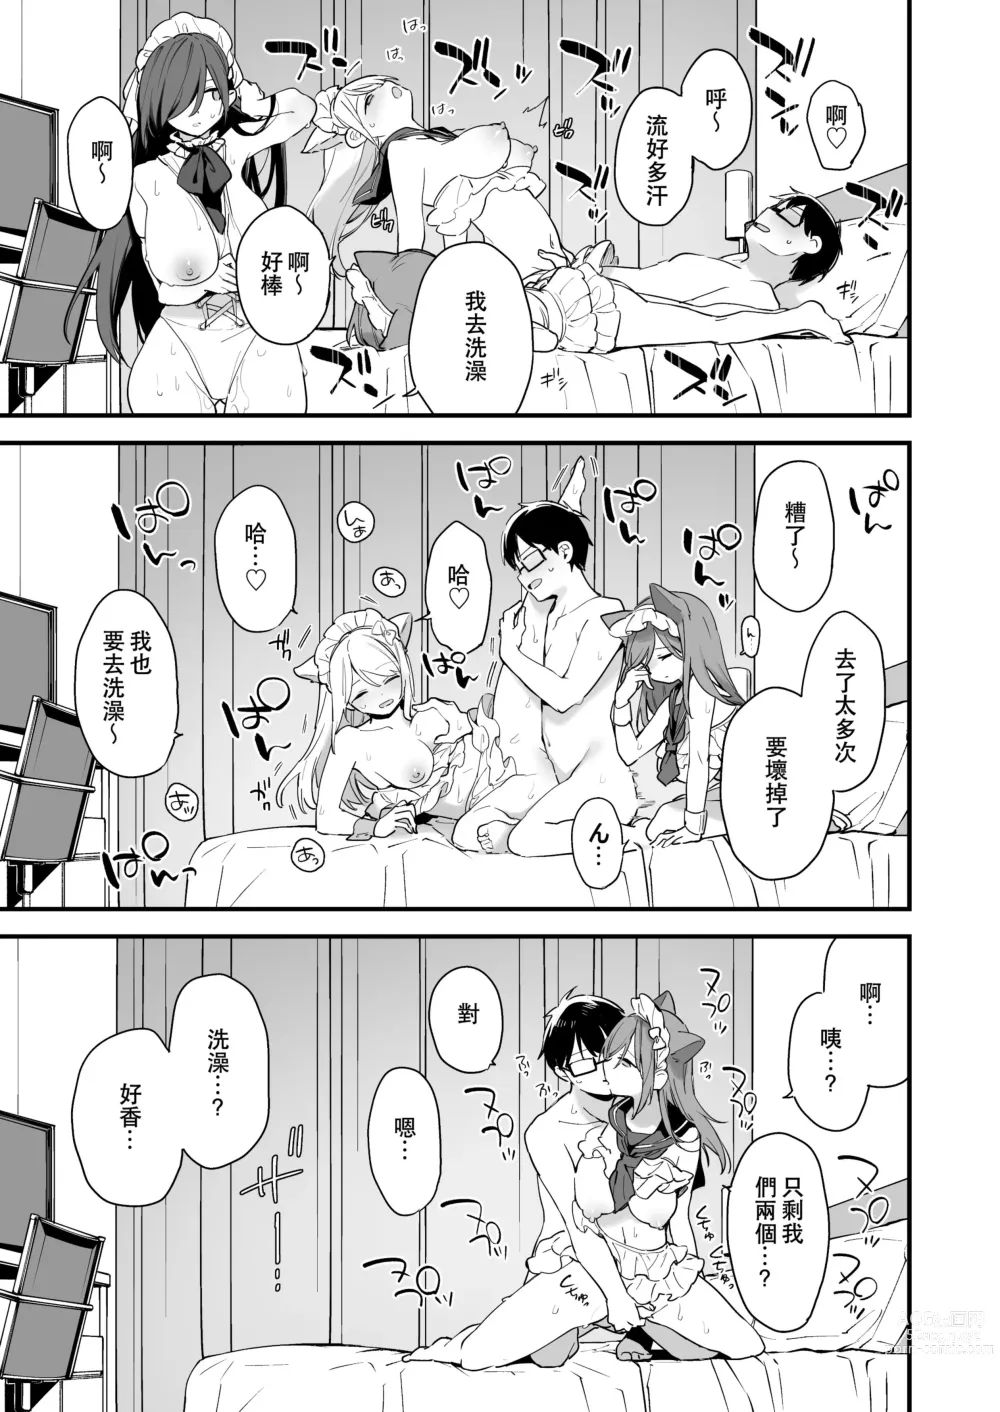 Page 49 of doujinshi 催淫コミケ